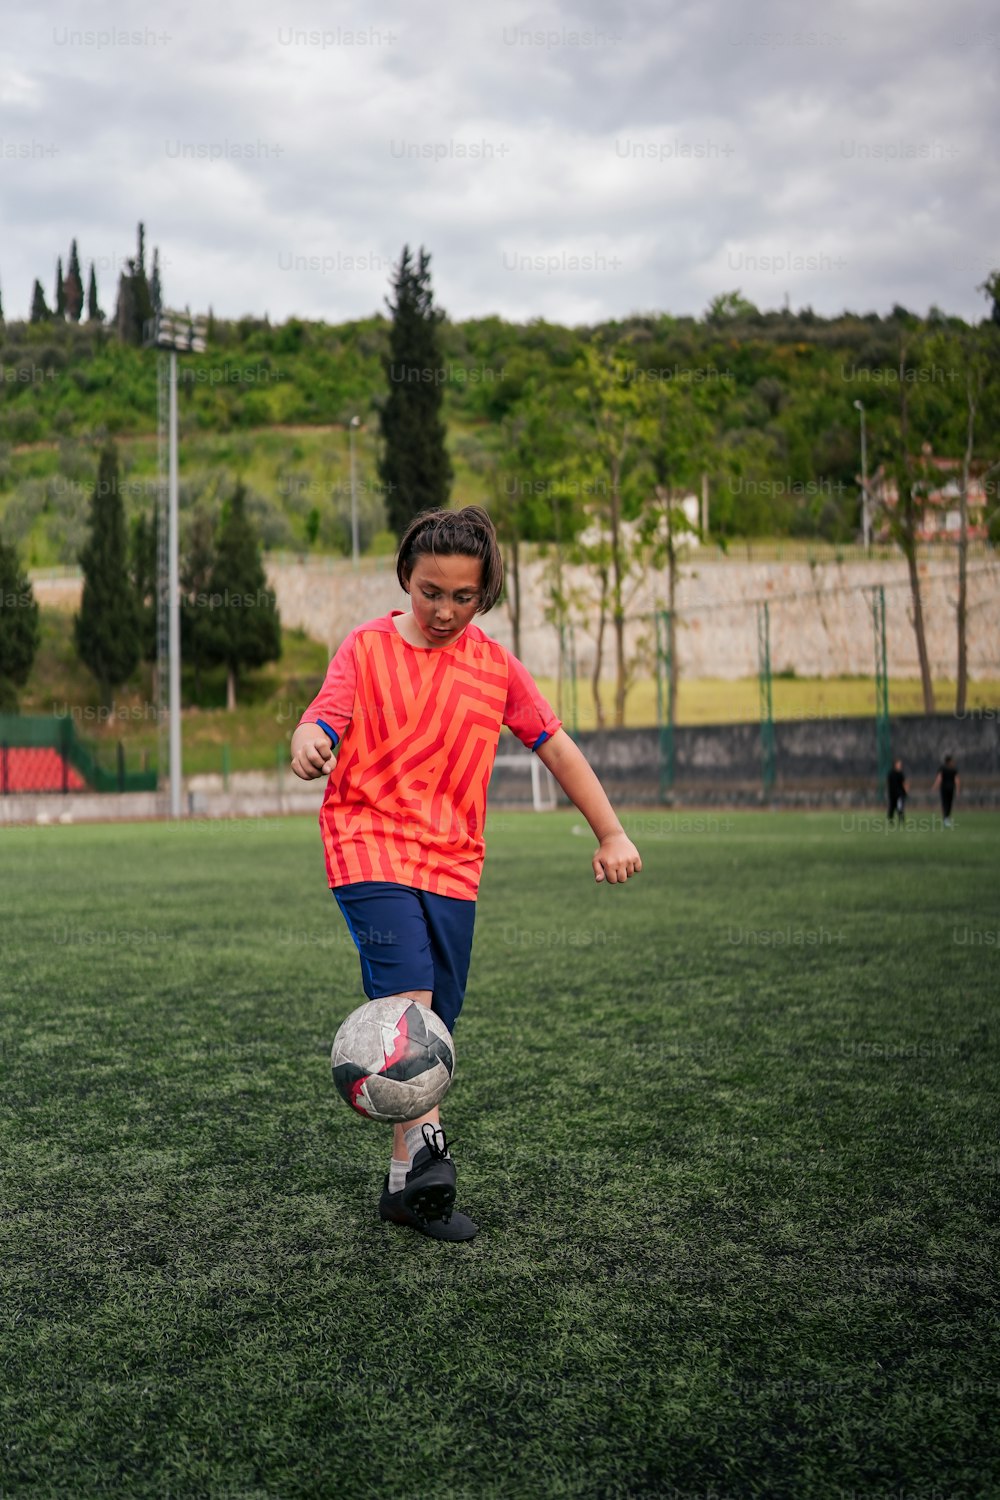 Un jeune garçon tapant dans un ballon de football sur un terrain